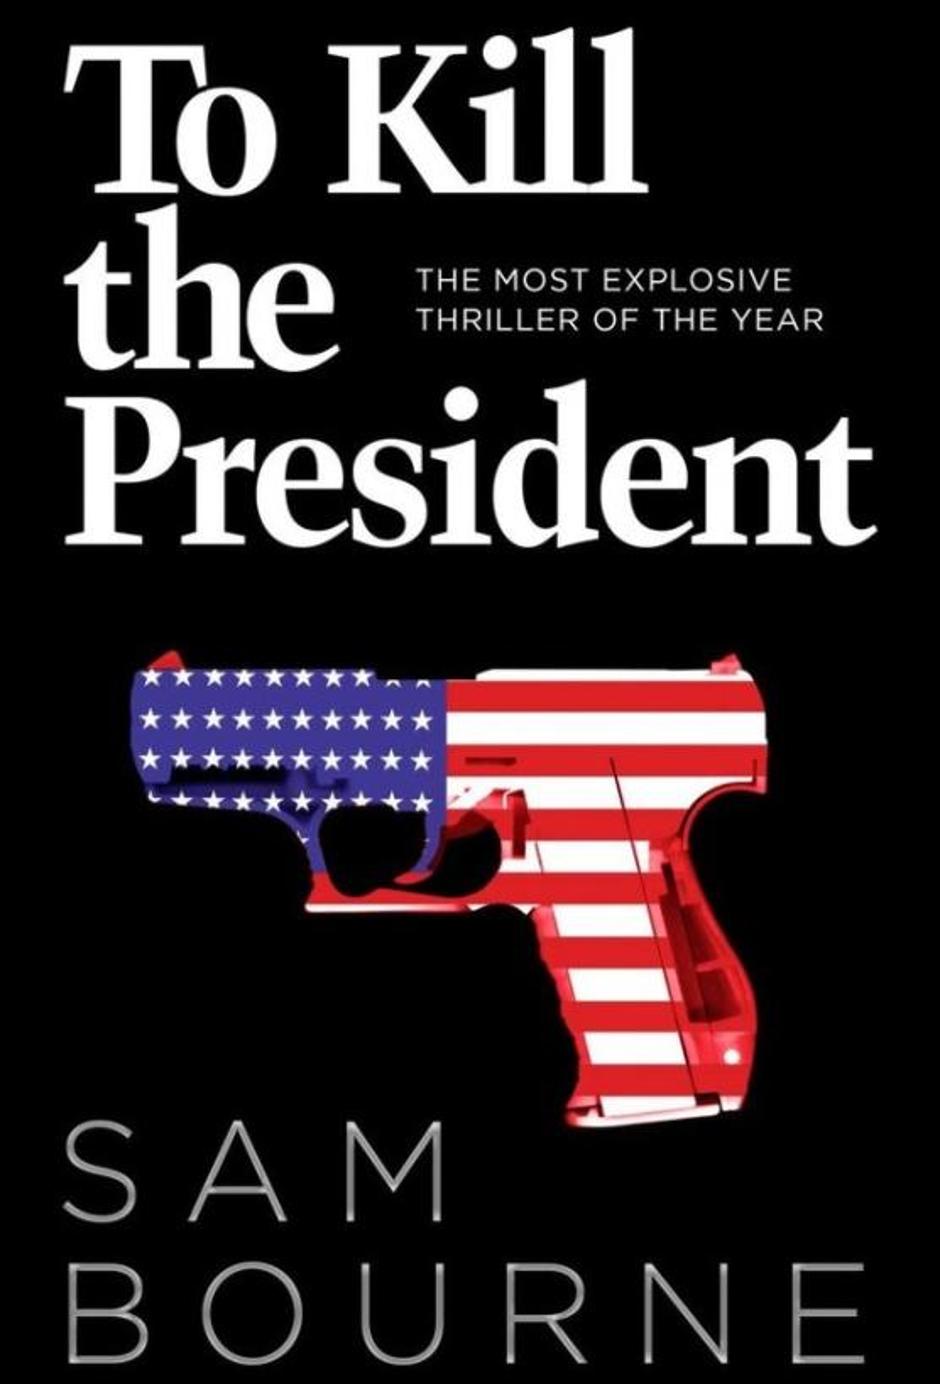 Jonathan Freedman, "To kill the president" | Author: YouTube